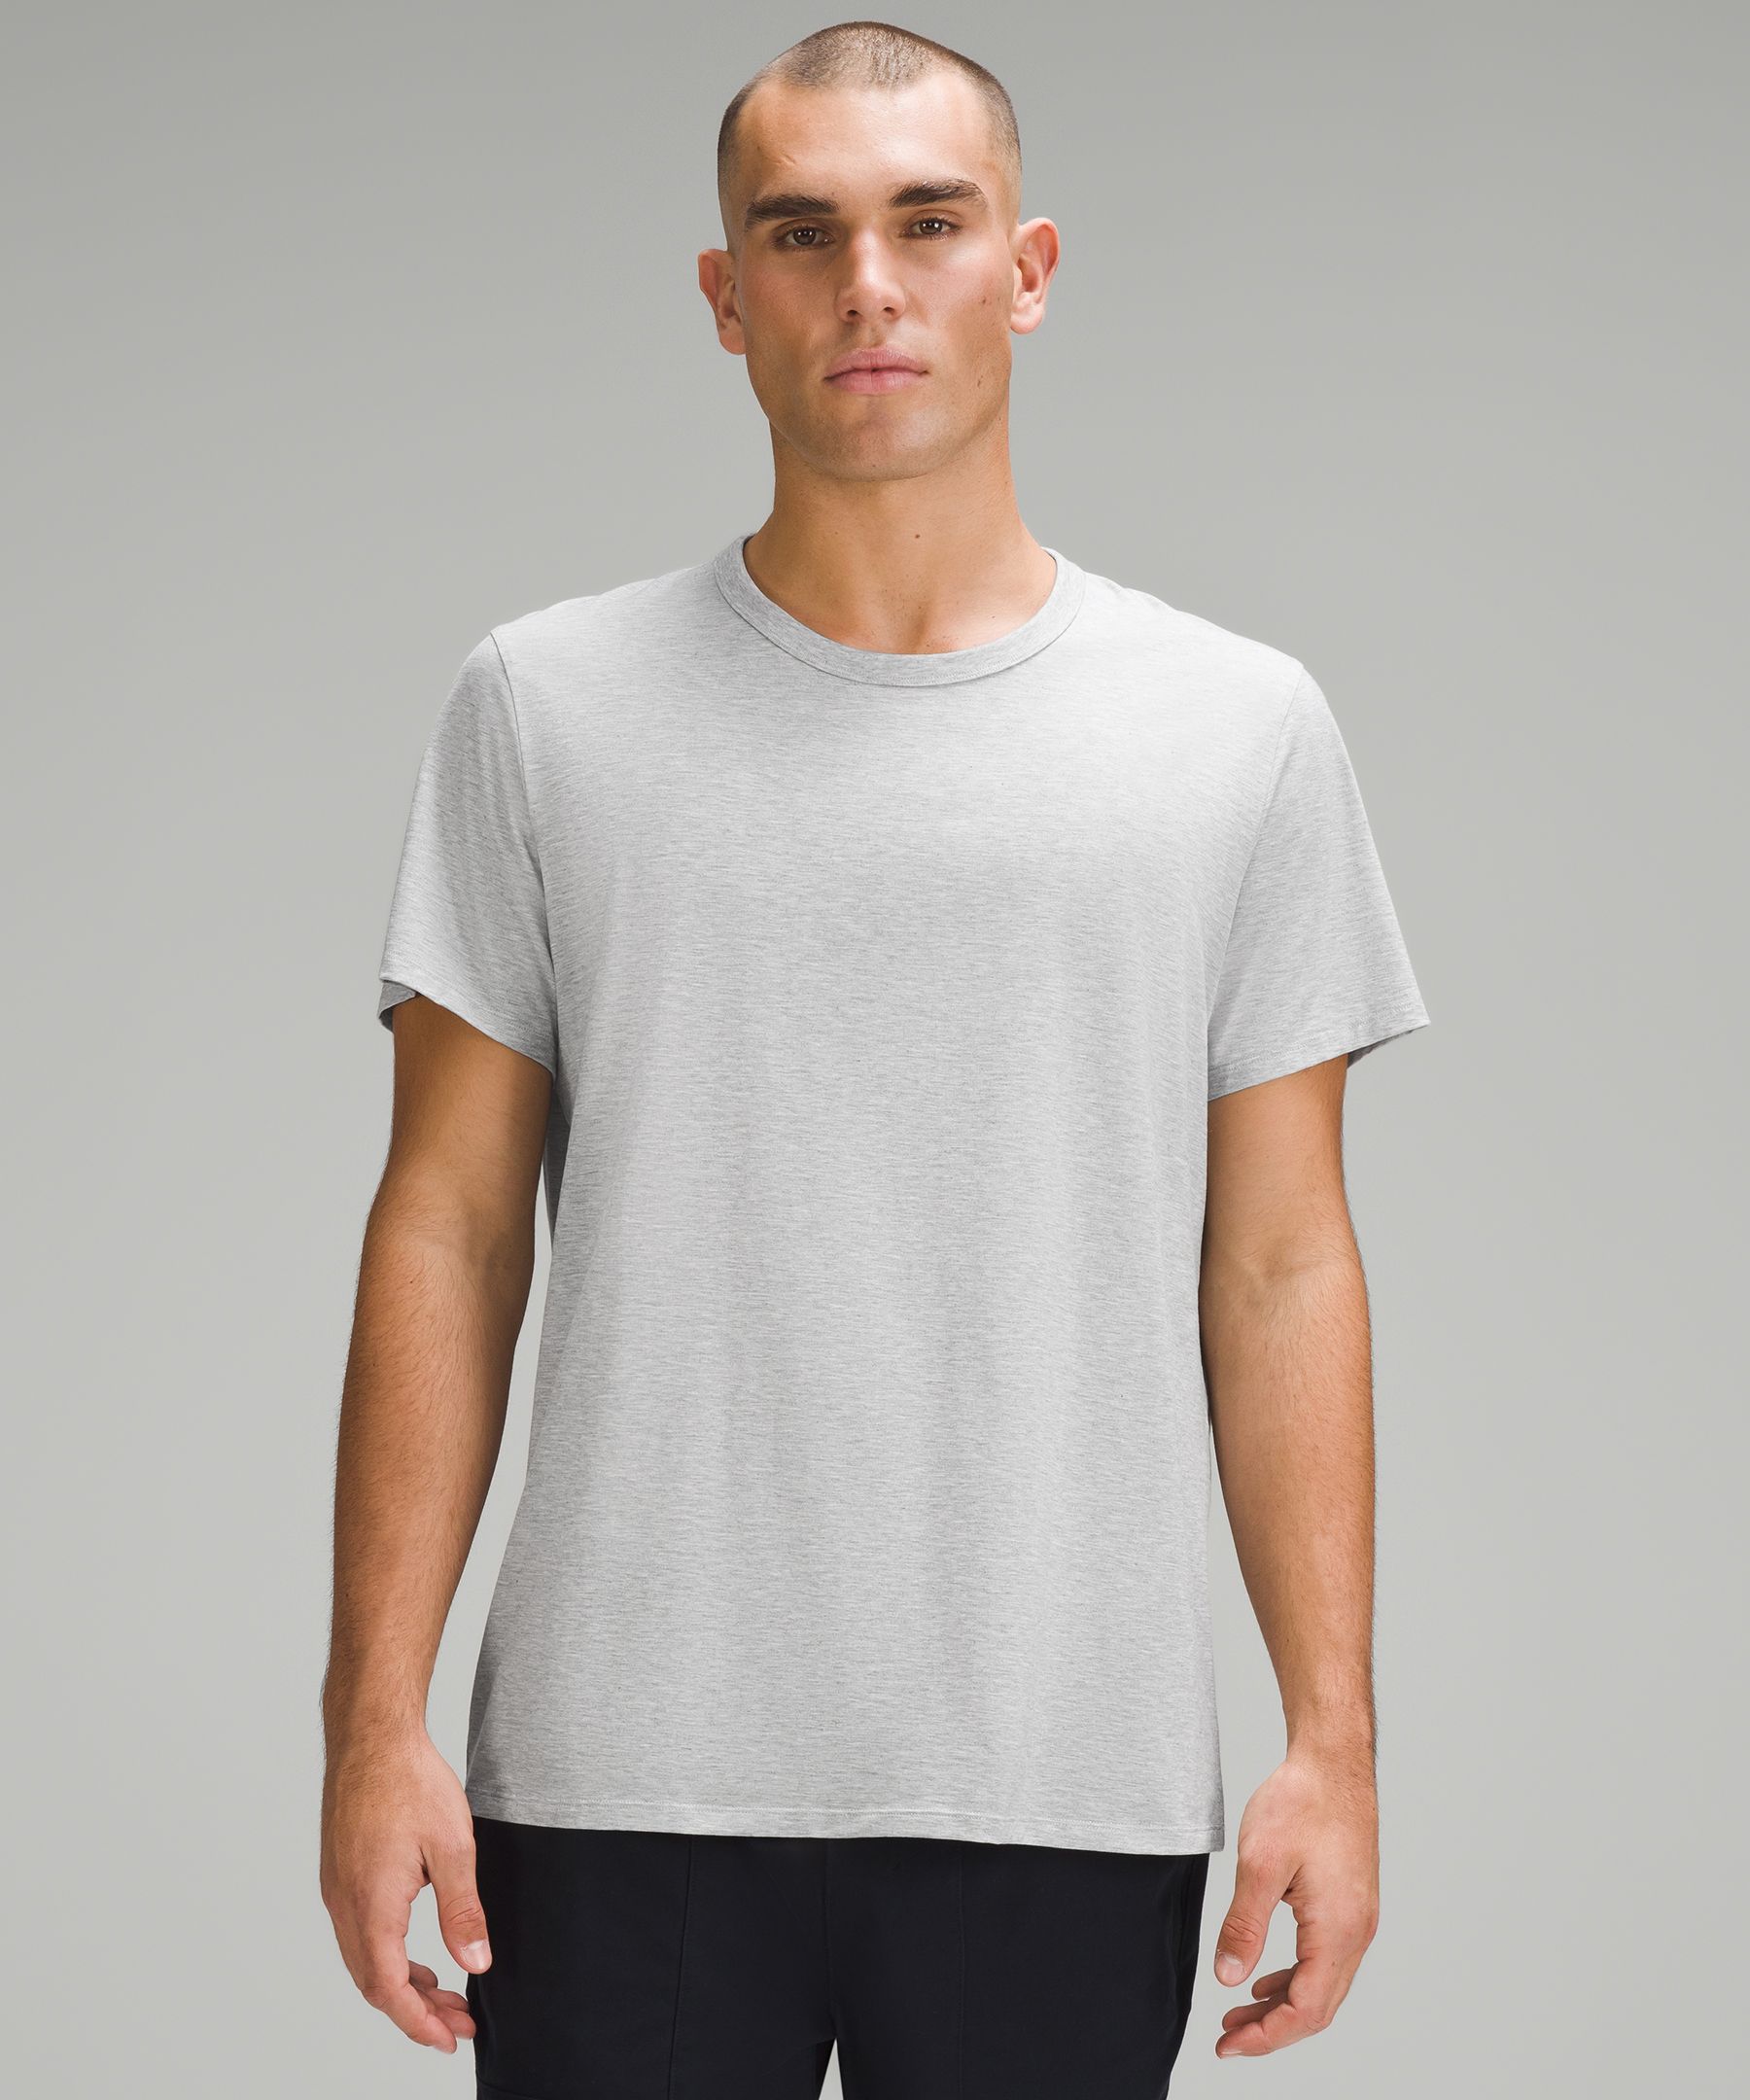 Lululemon Men's T-Shirt - Grey - XL